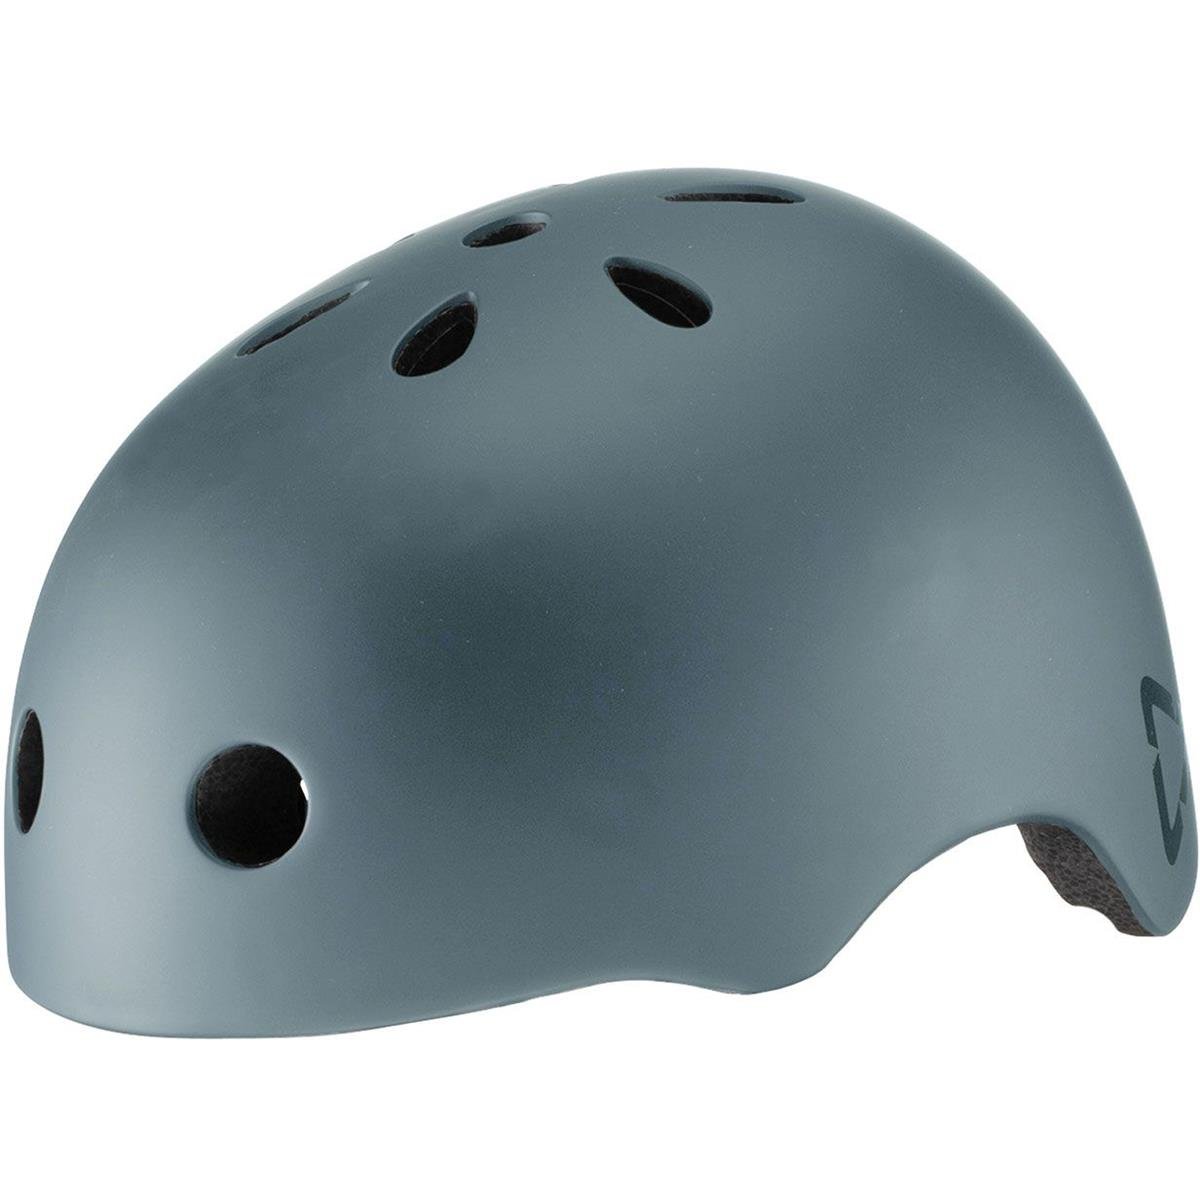 Leatt BMX/Dirt Helmet 1.0 Urban Ivy